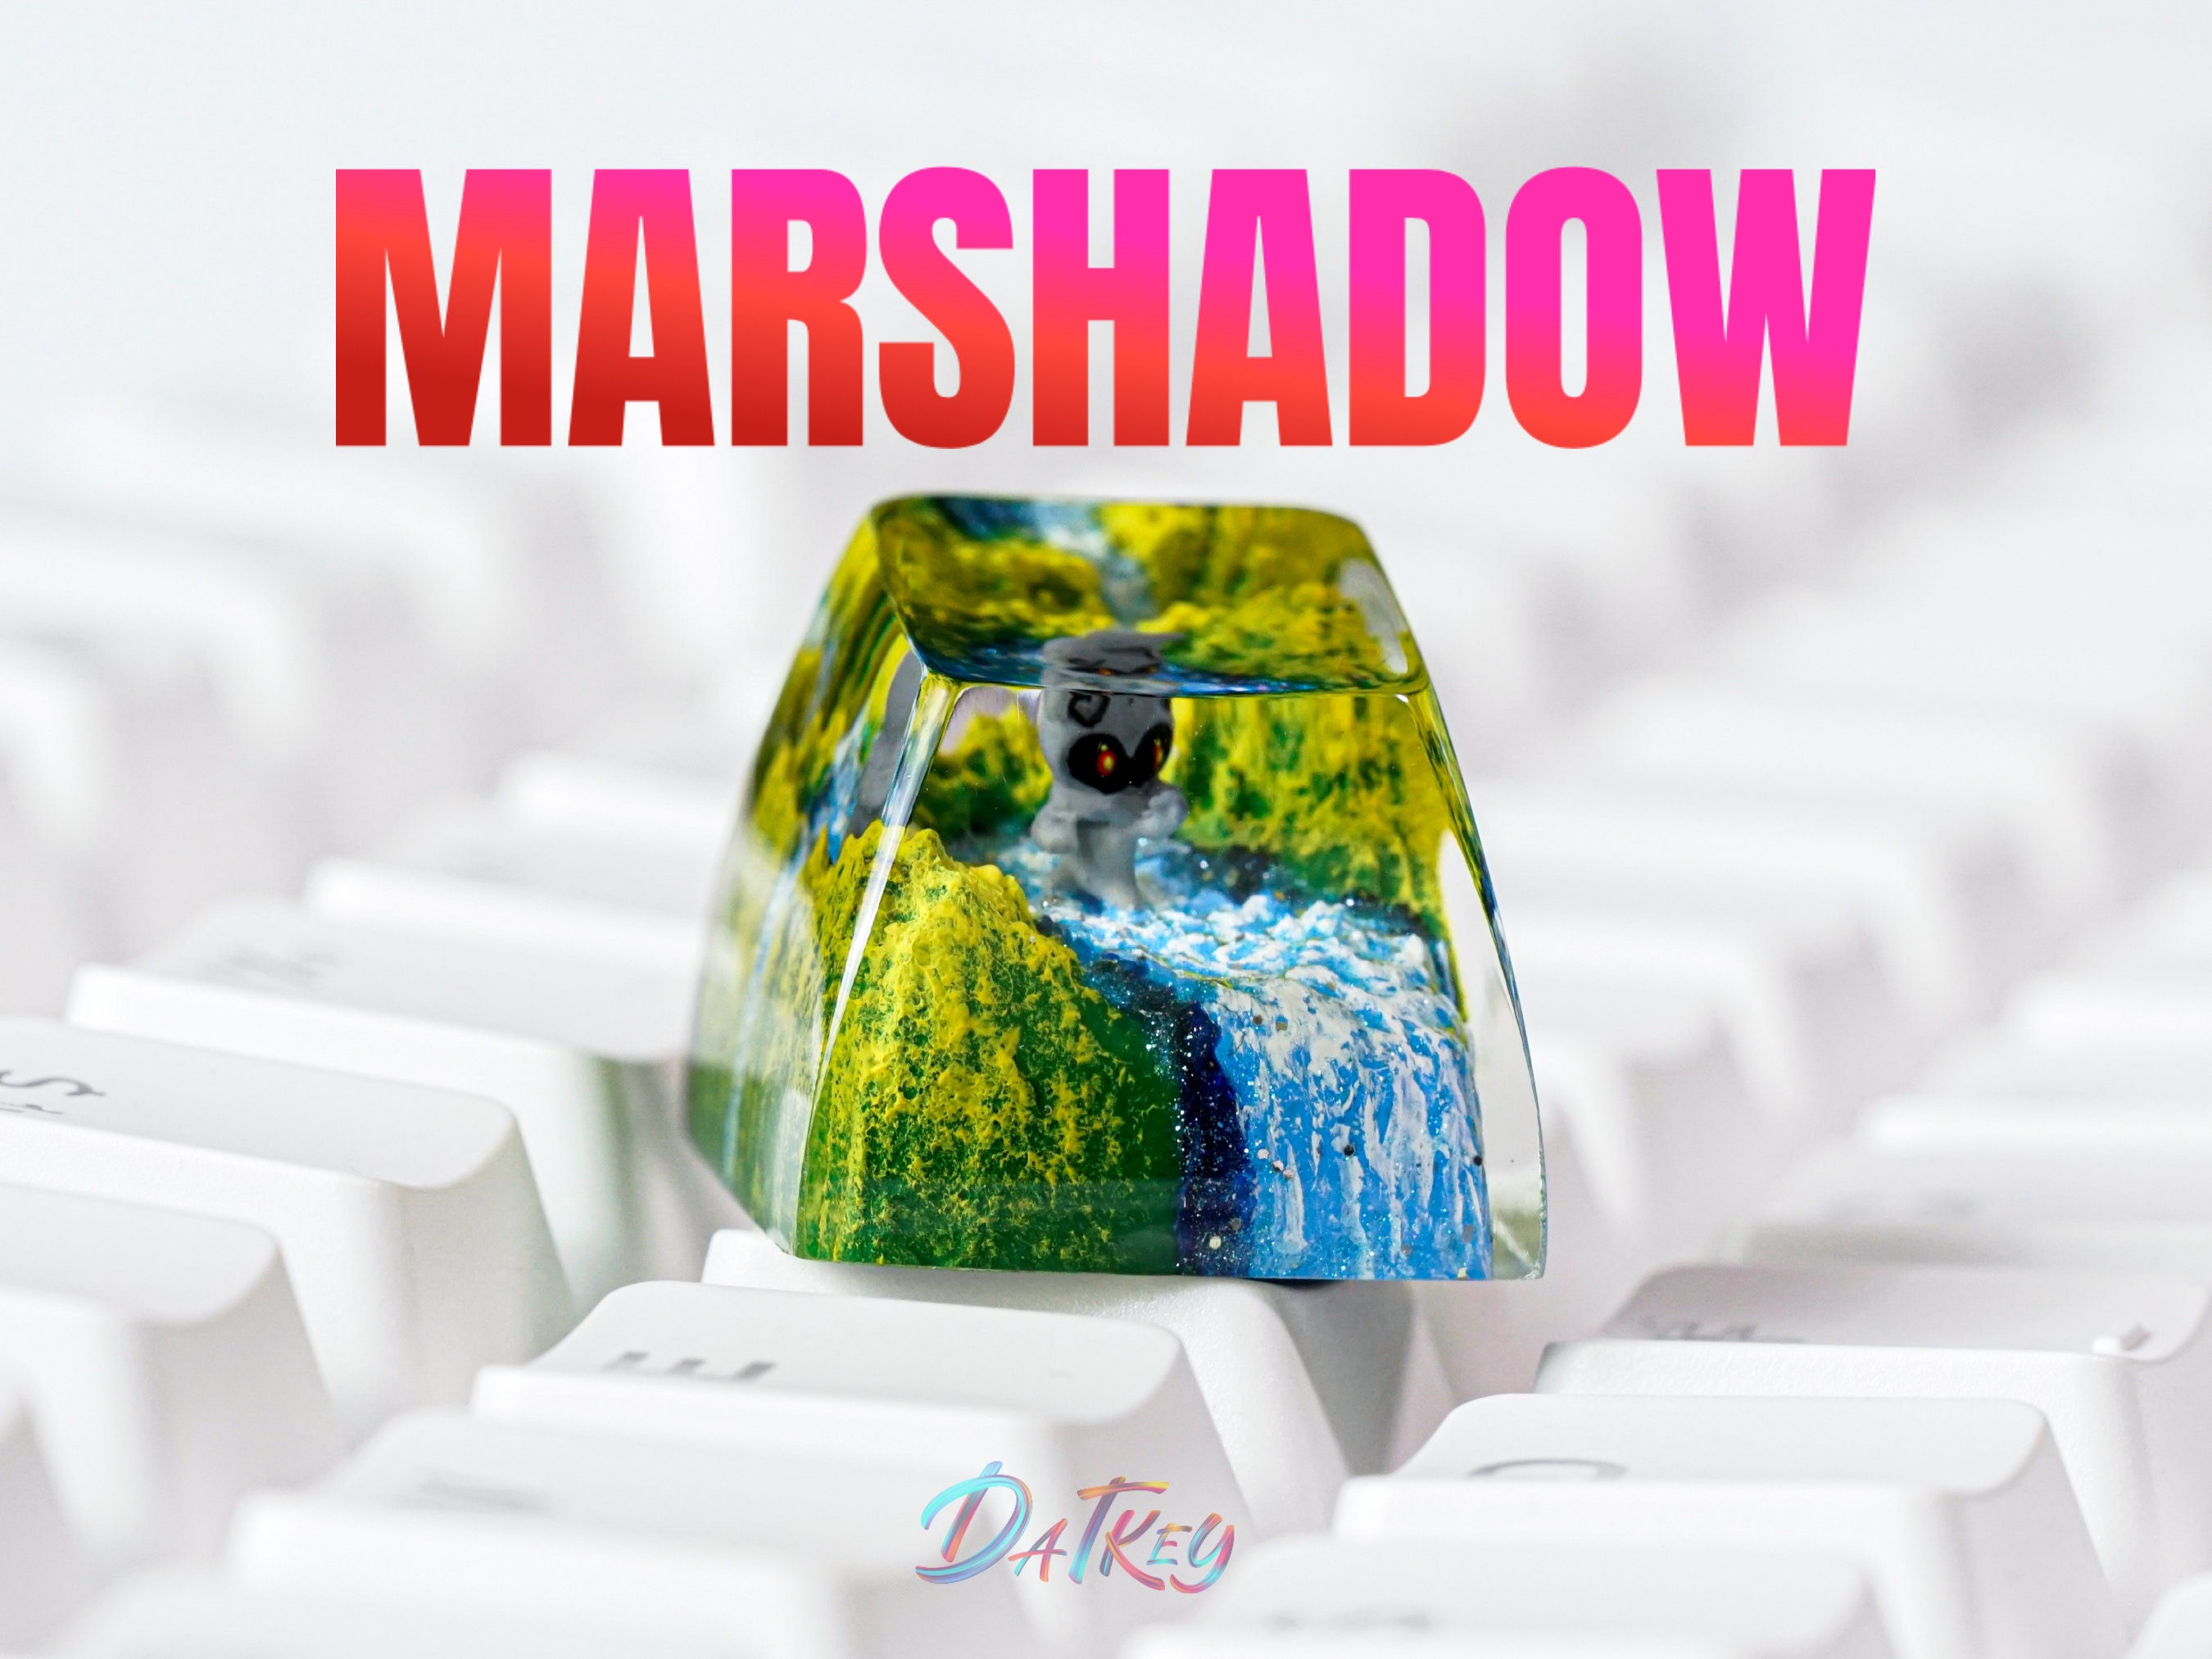 Marshadow Keycap, Pokemon Keycap, Artisan Keycap, Esc Keycap, Keycap for MX Cherry Switches Keyboard, Handmade Gift